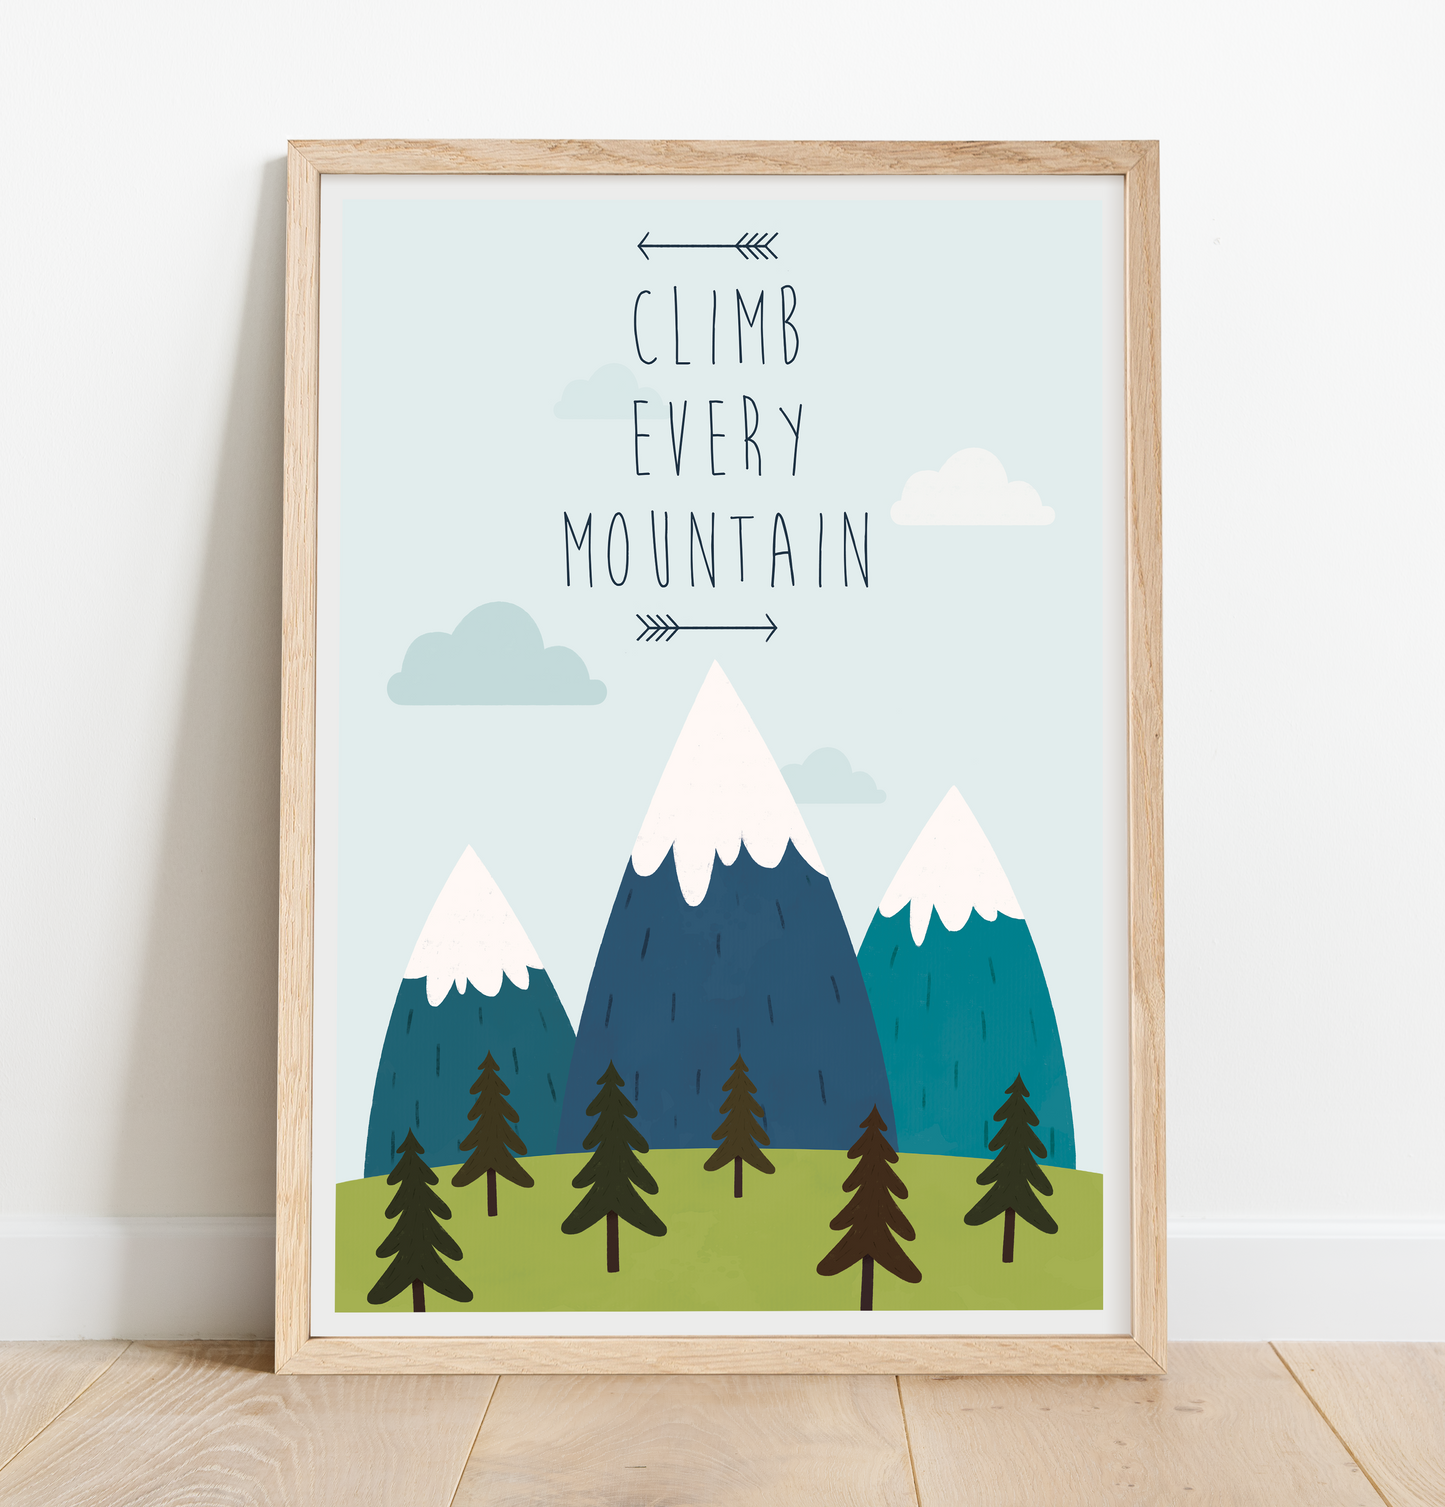 Climb every mountain quote print